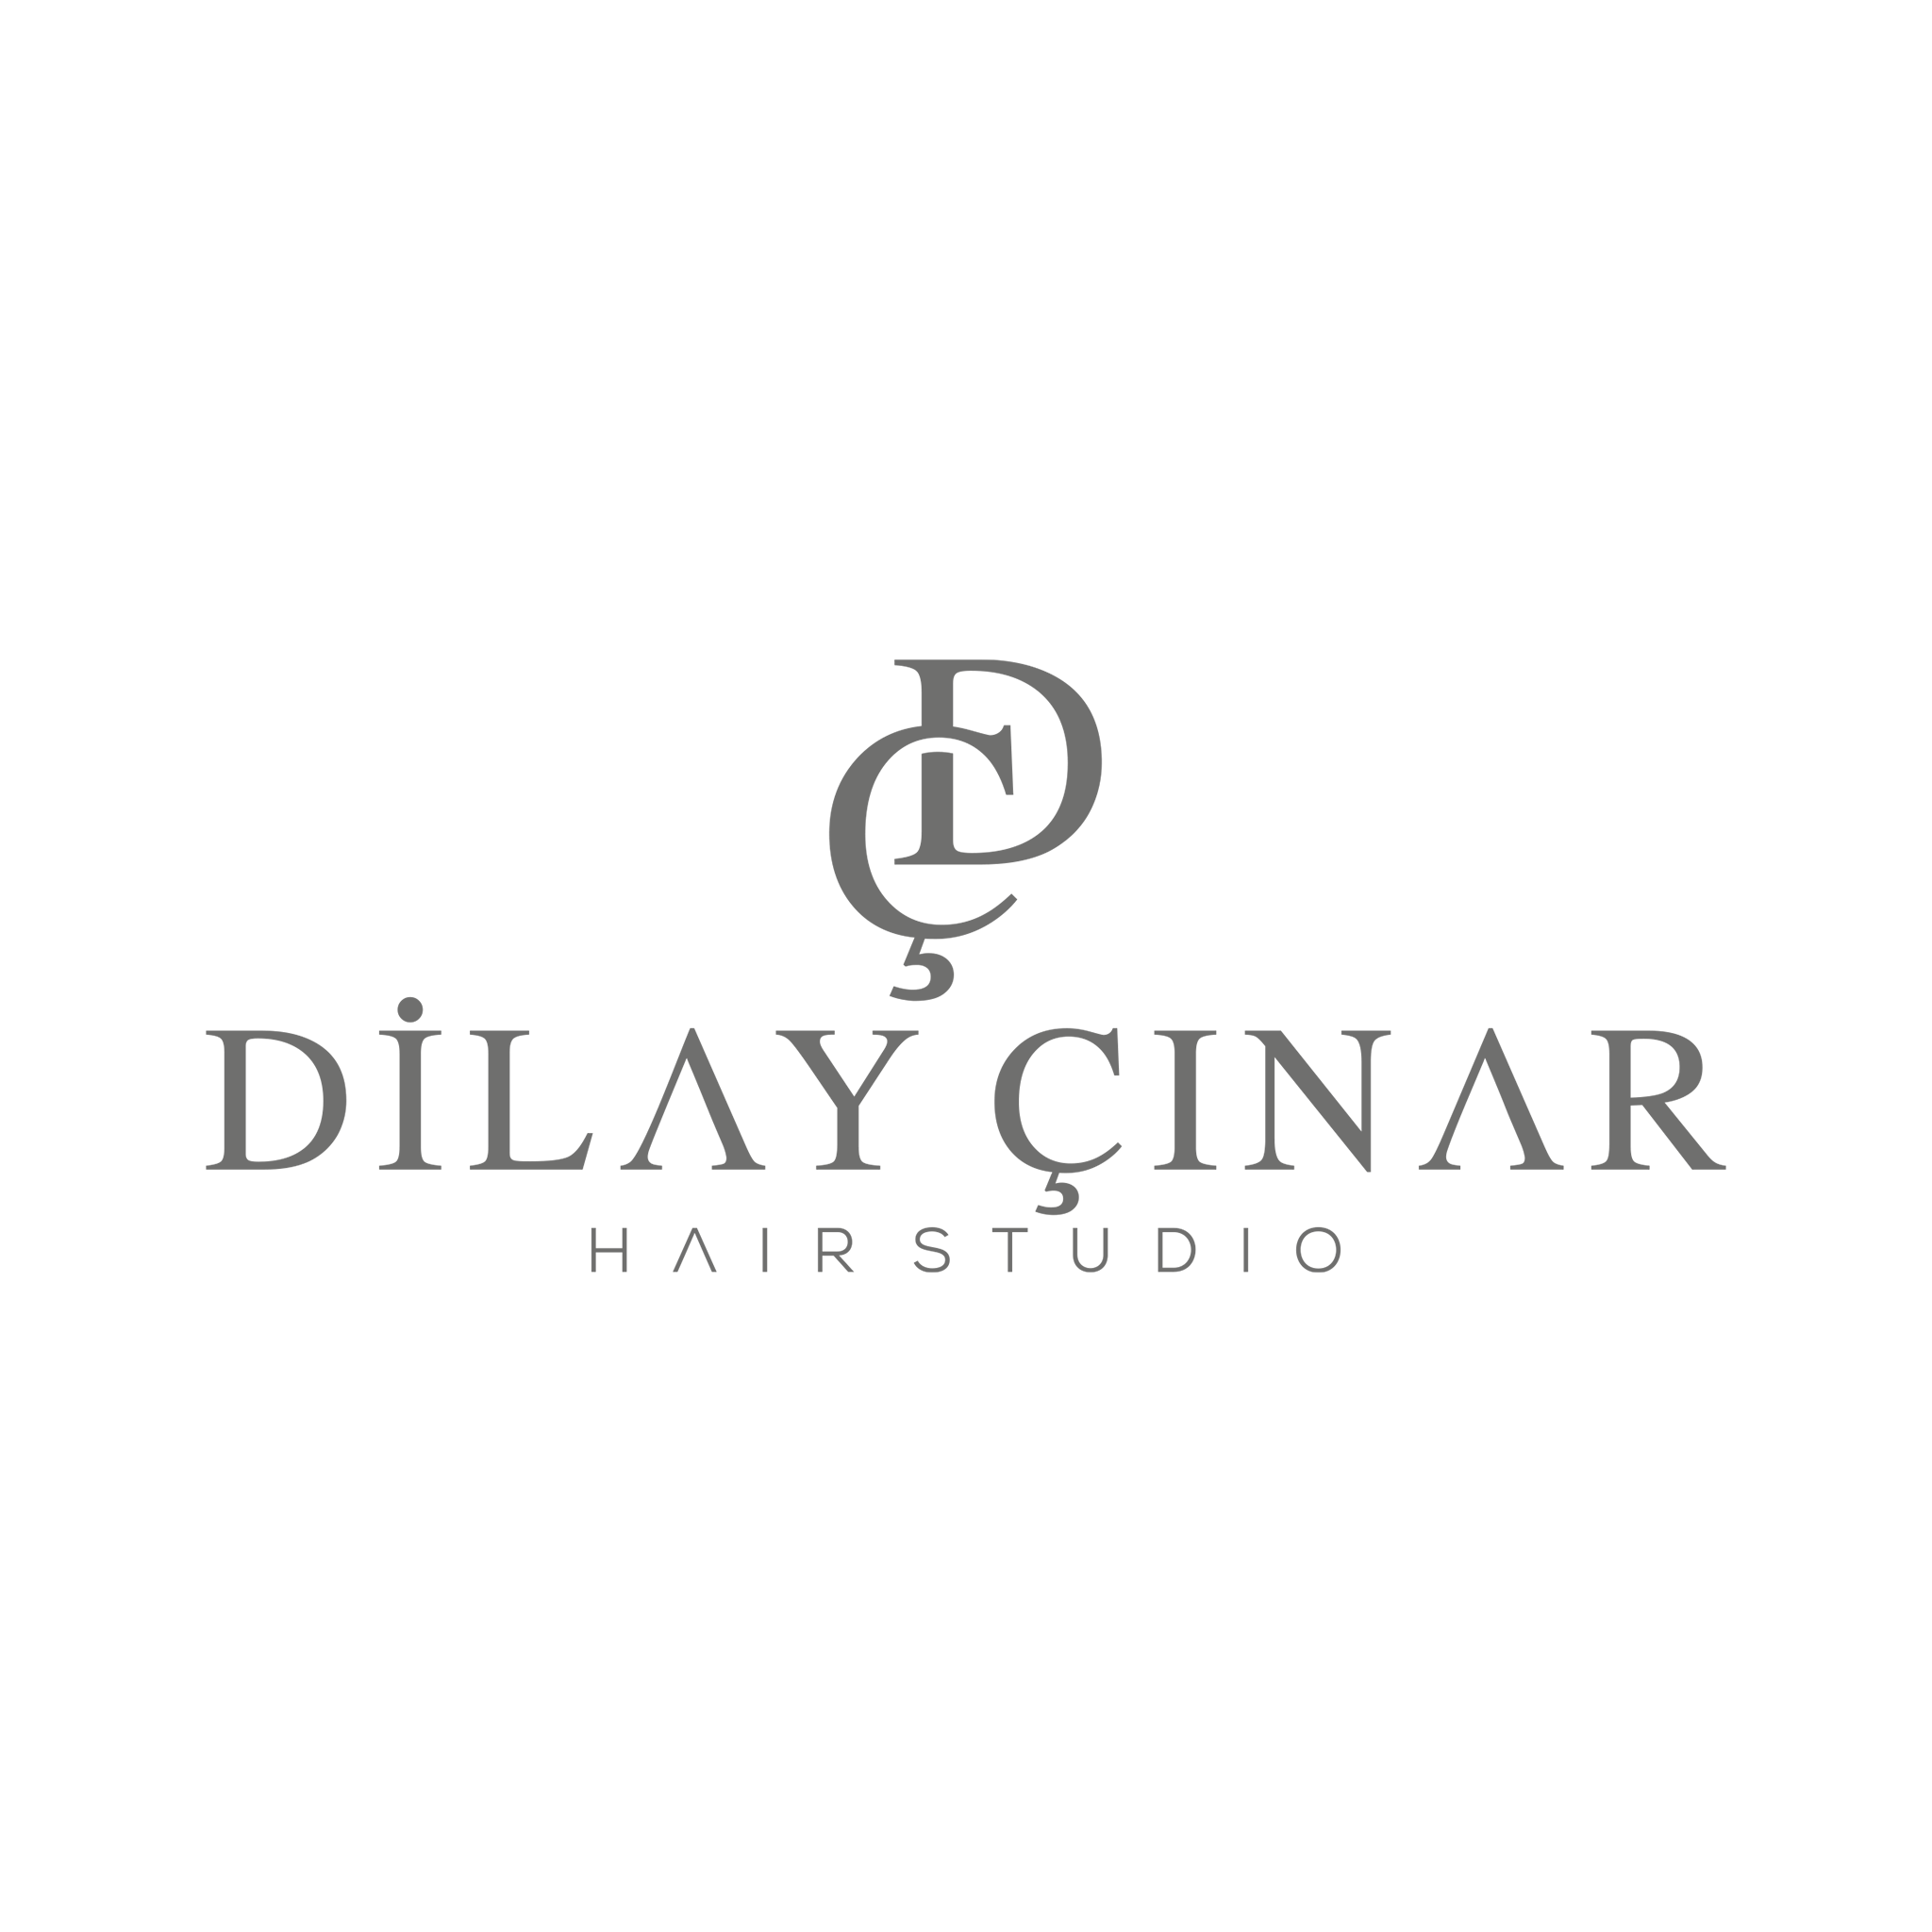 Dilay Cinar Hair Studio